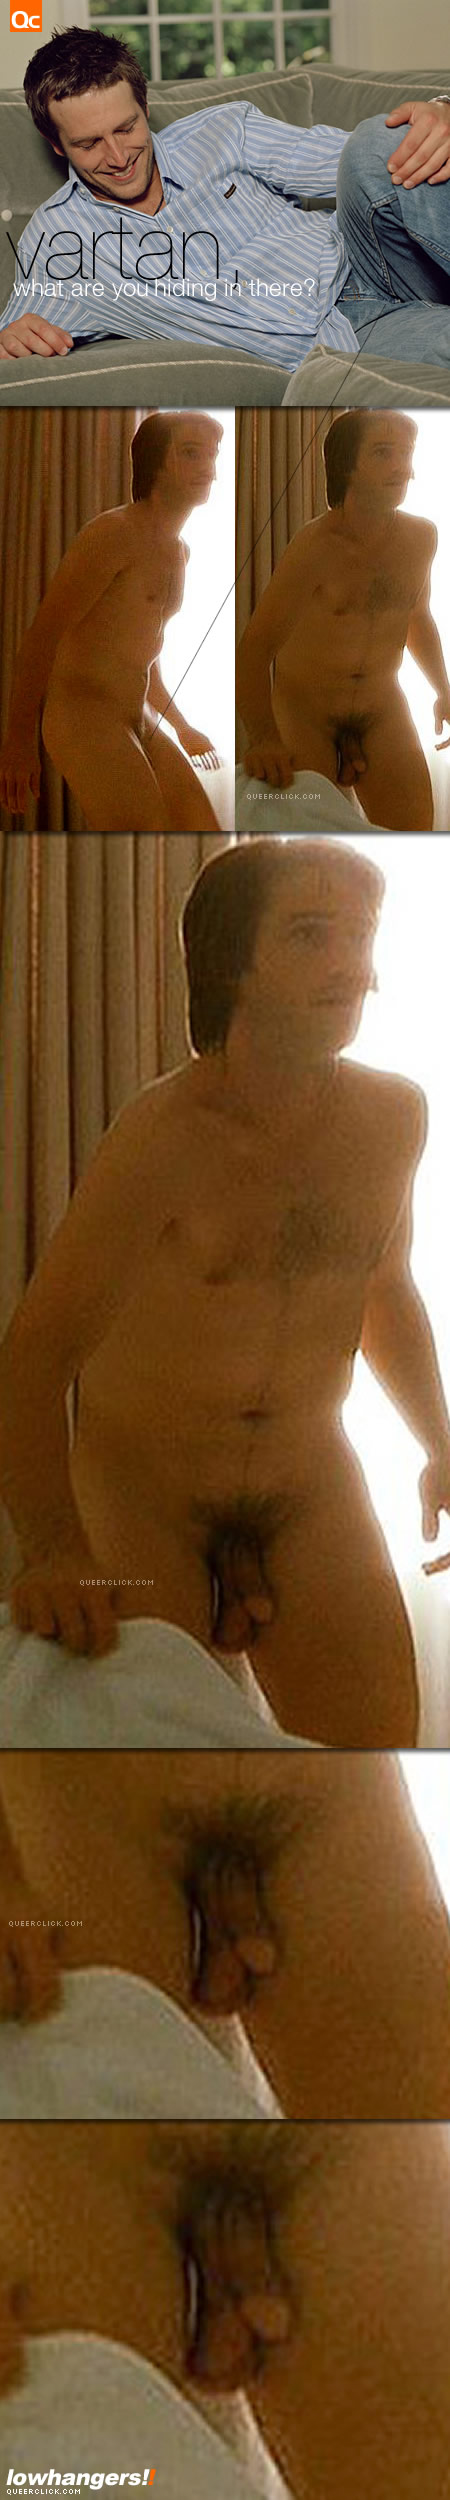 Michael Vartan Frontal Nude